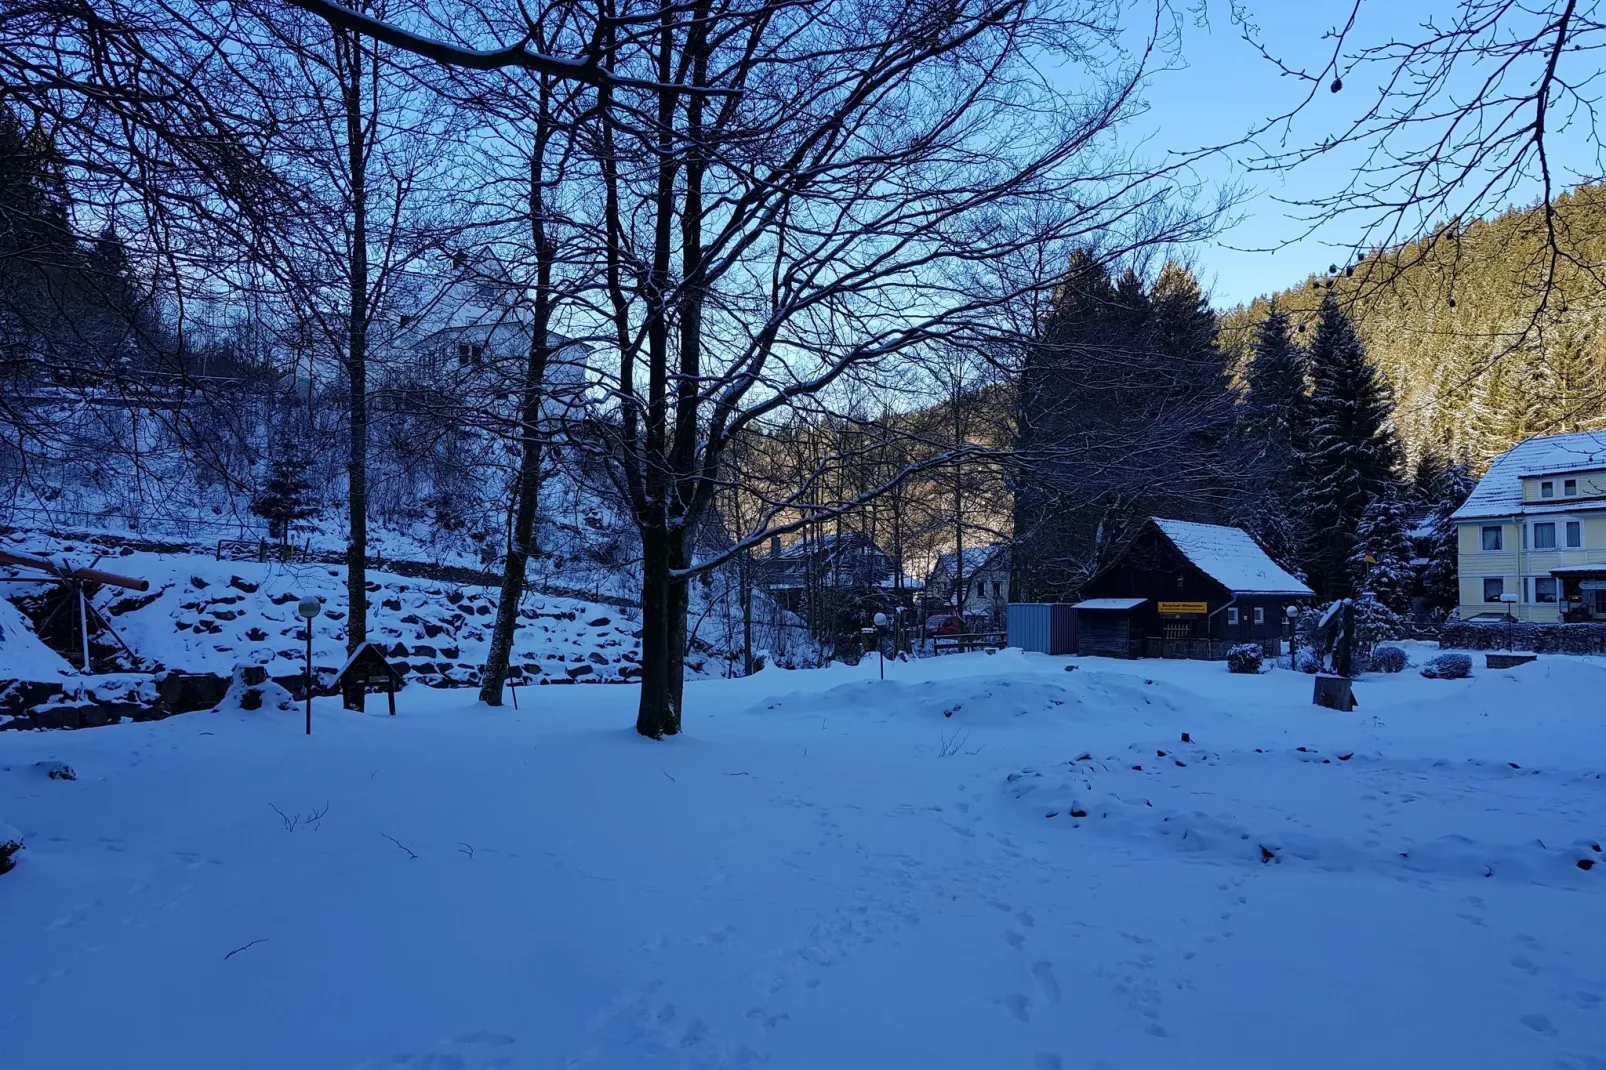 Spiegeltal-Gebied winter 5km